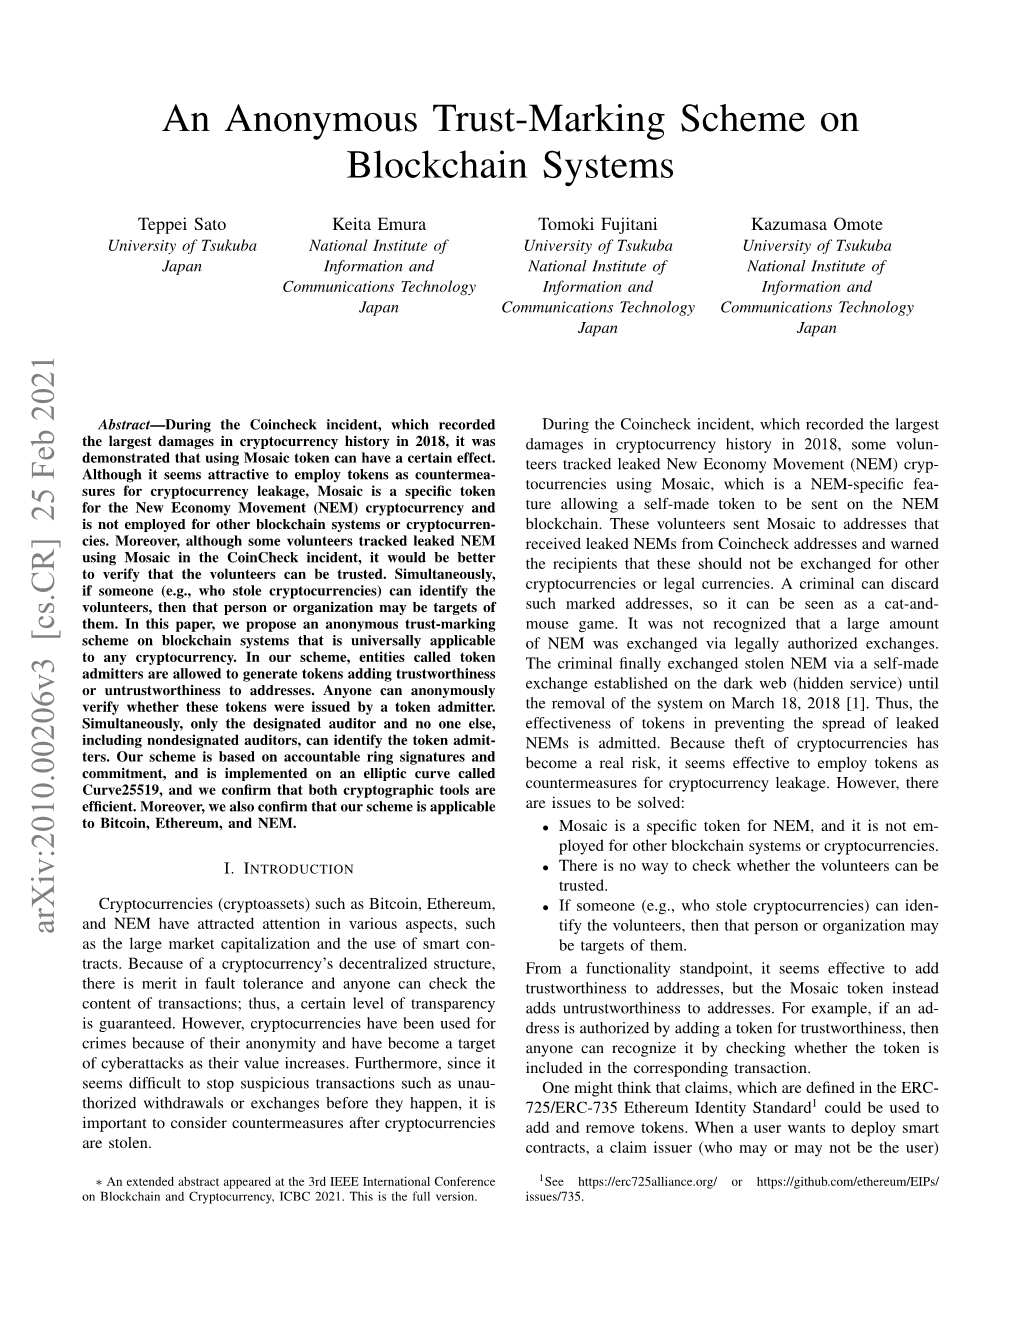 An Anonymous Trust-Marking Scheme on Blockchain Systems